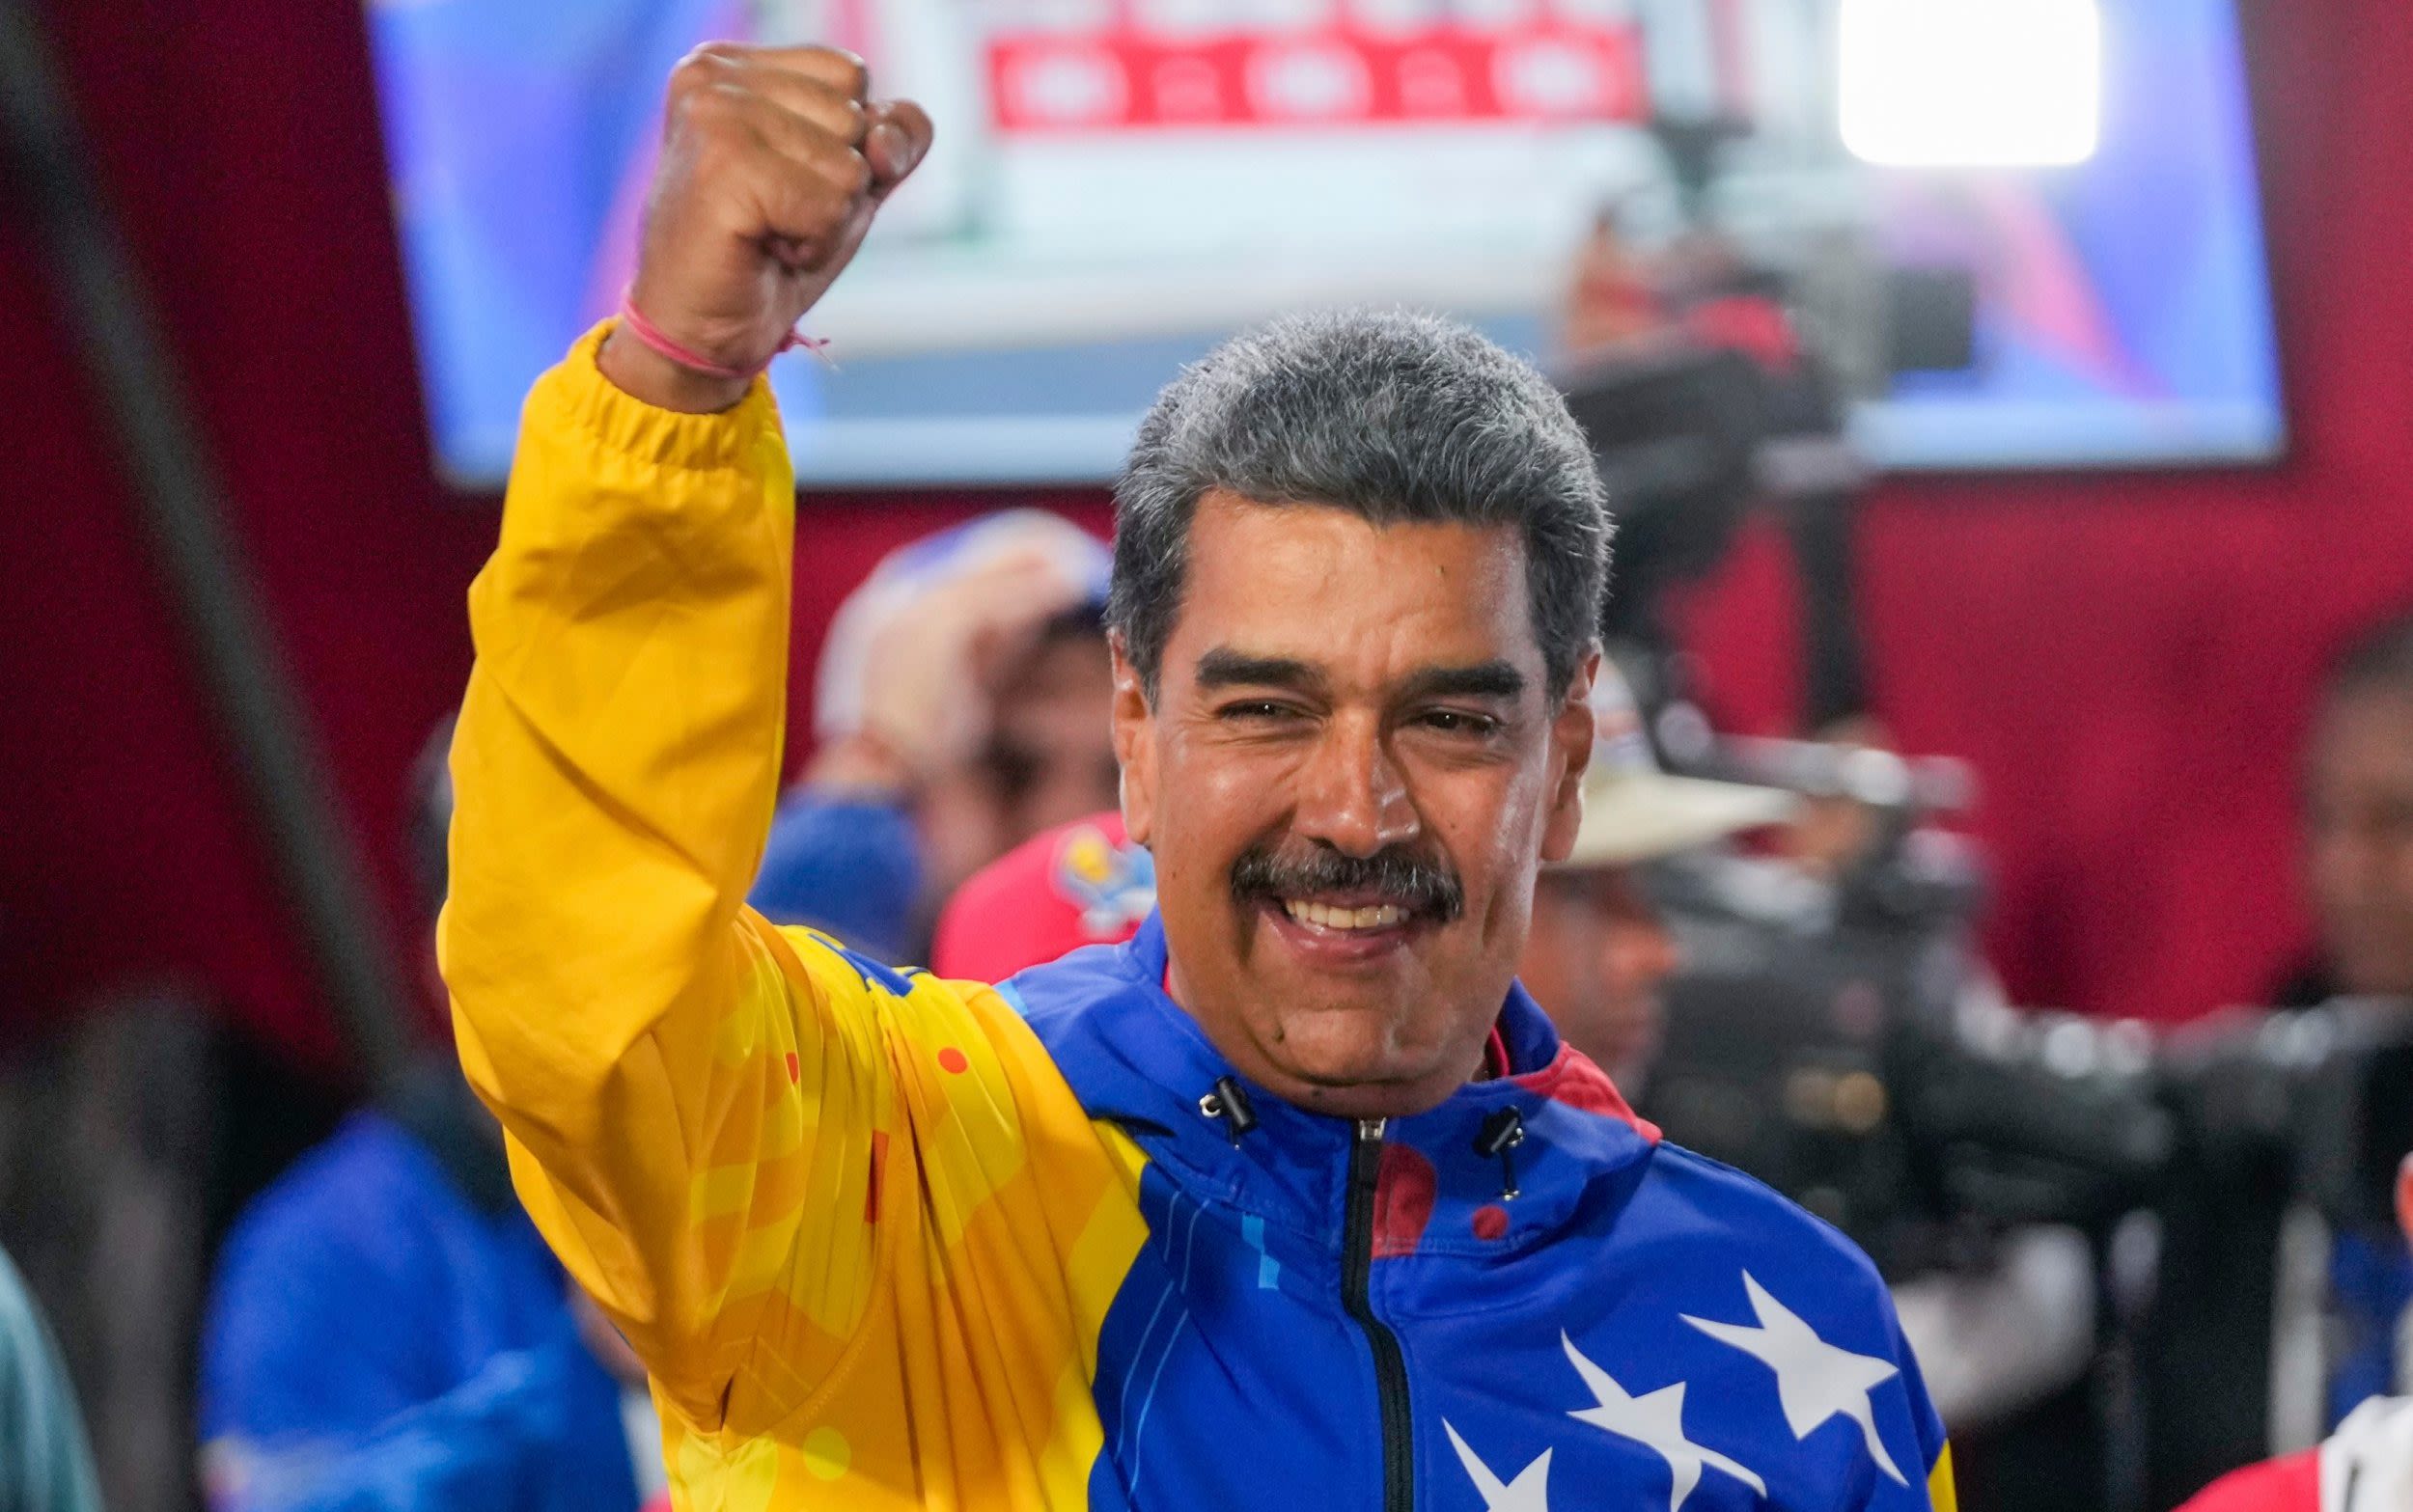 Venezuela’s President Nicolás Maduro wins re-election, contradicting exit polls